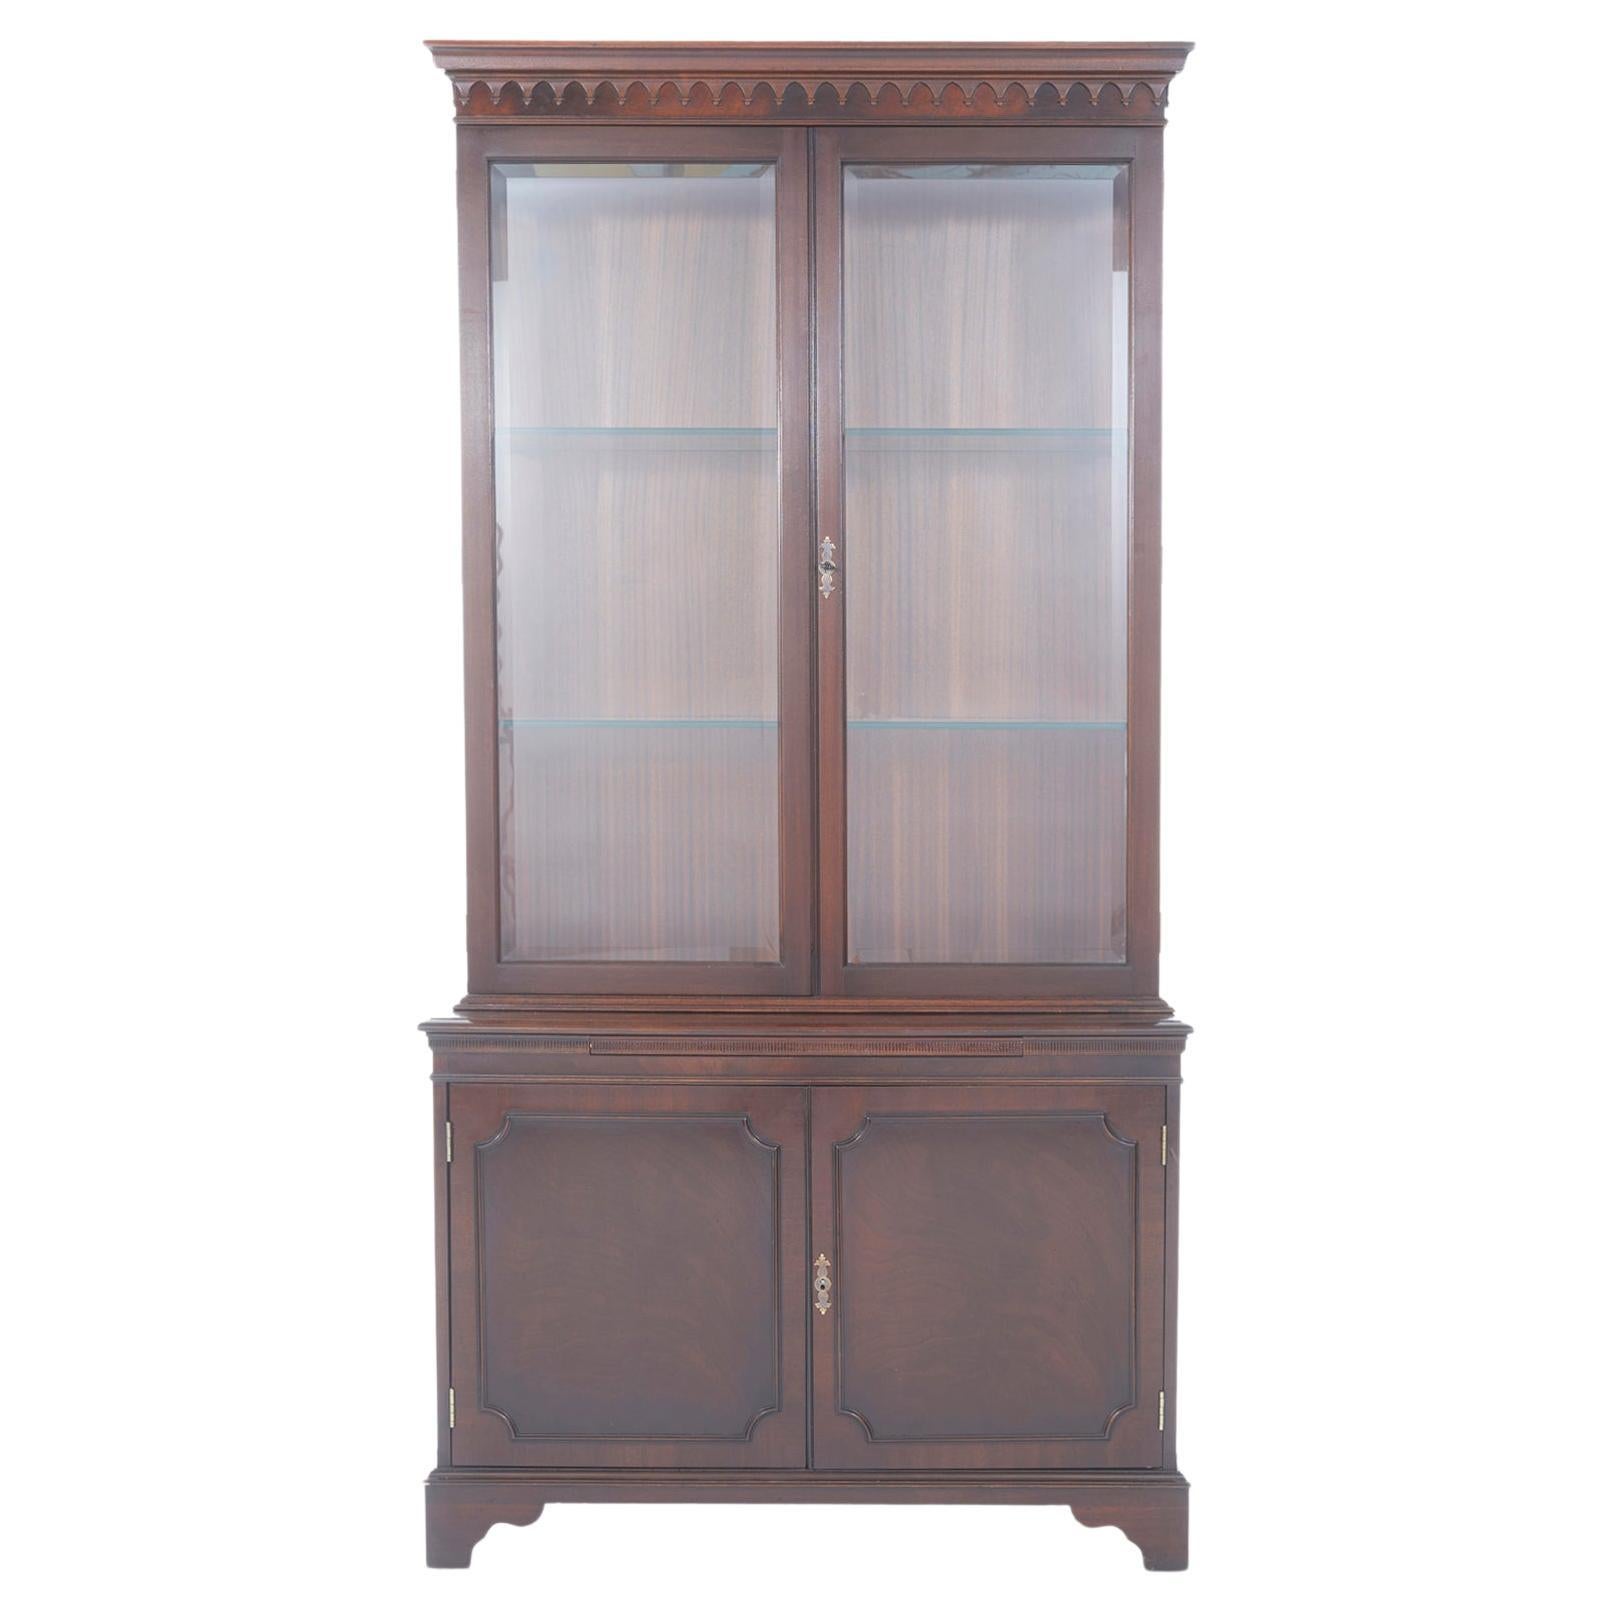 English Mahogany Wood Cabinet / Bookcase